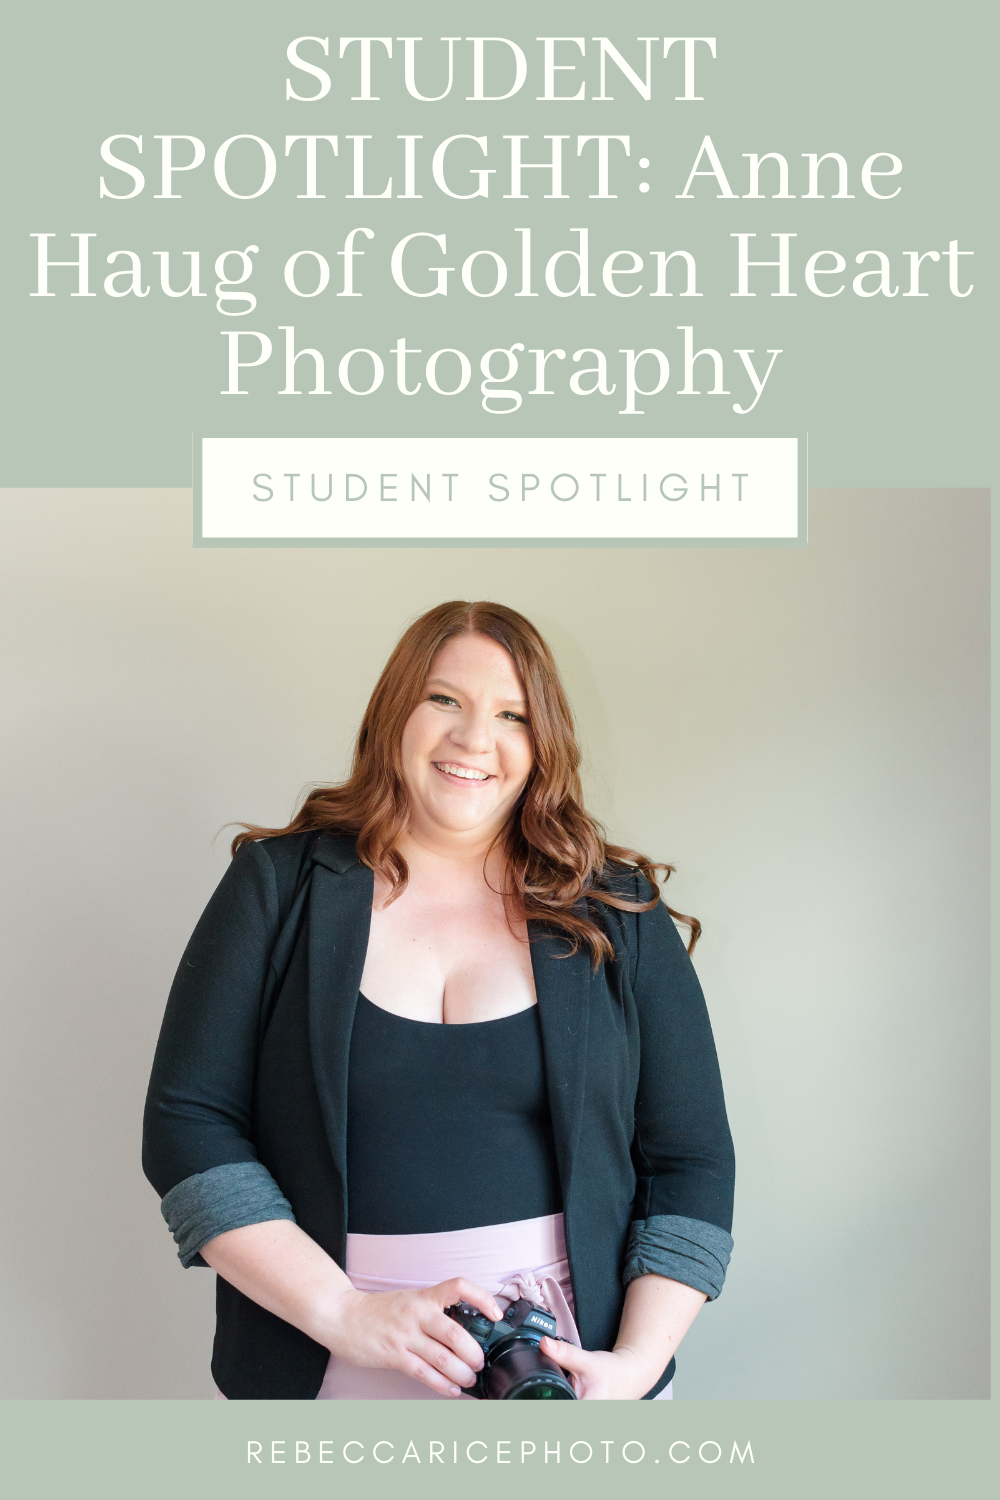 Student Spotlight: Anne Haug of Golden Heart Photography